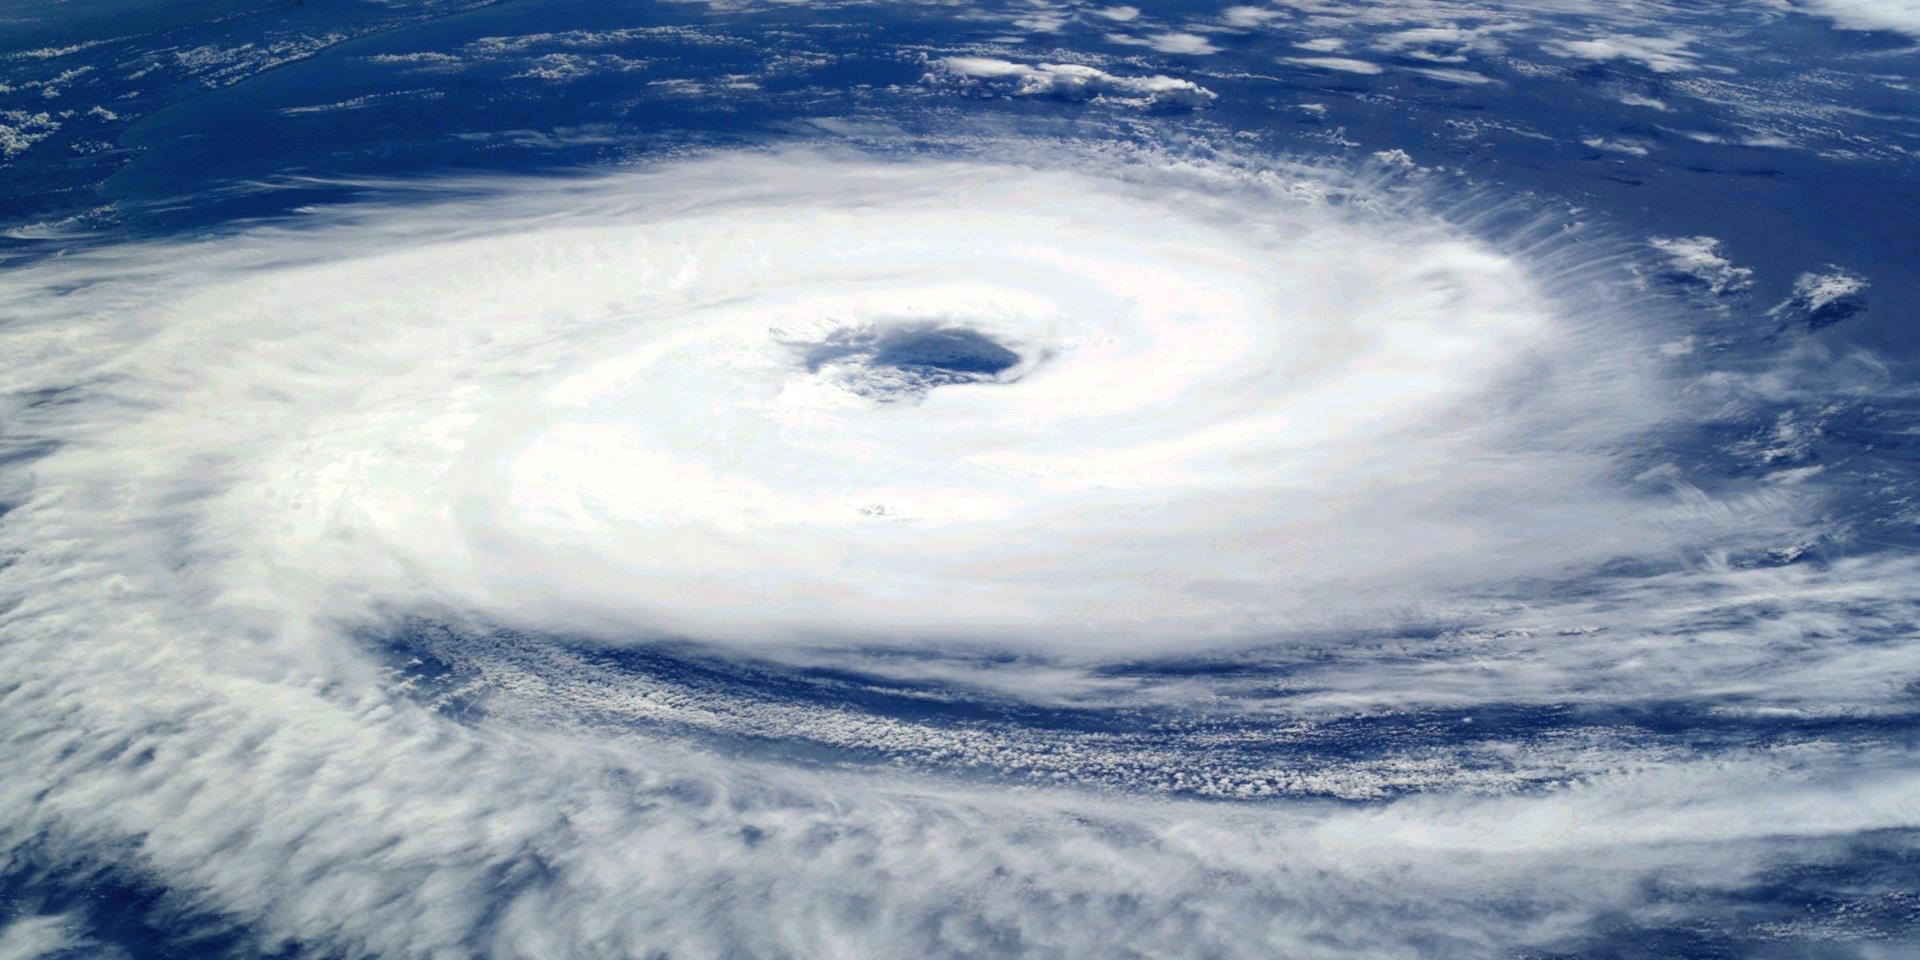 Cyclone Image